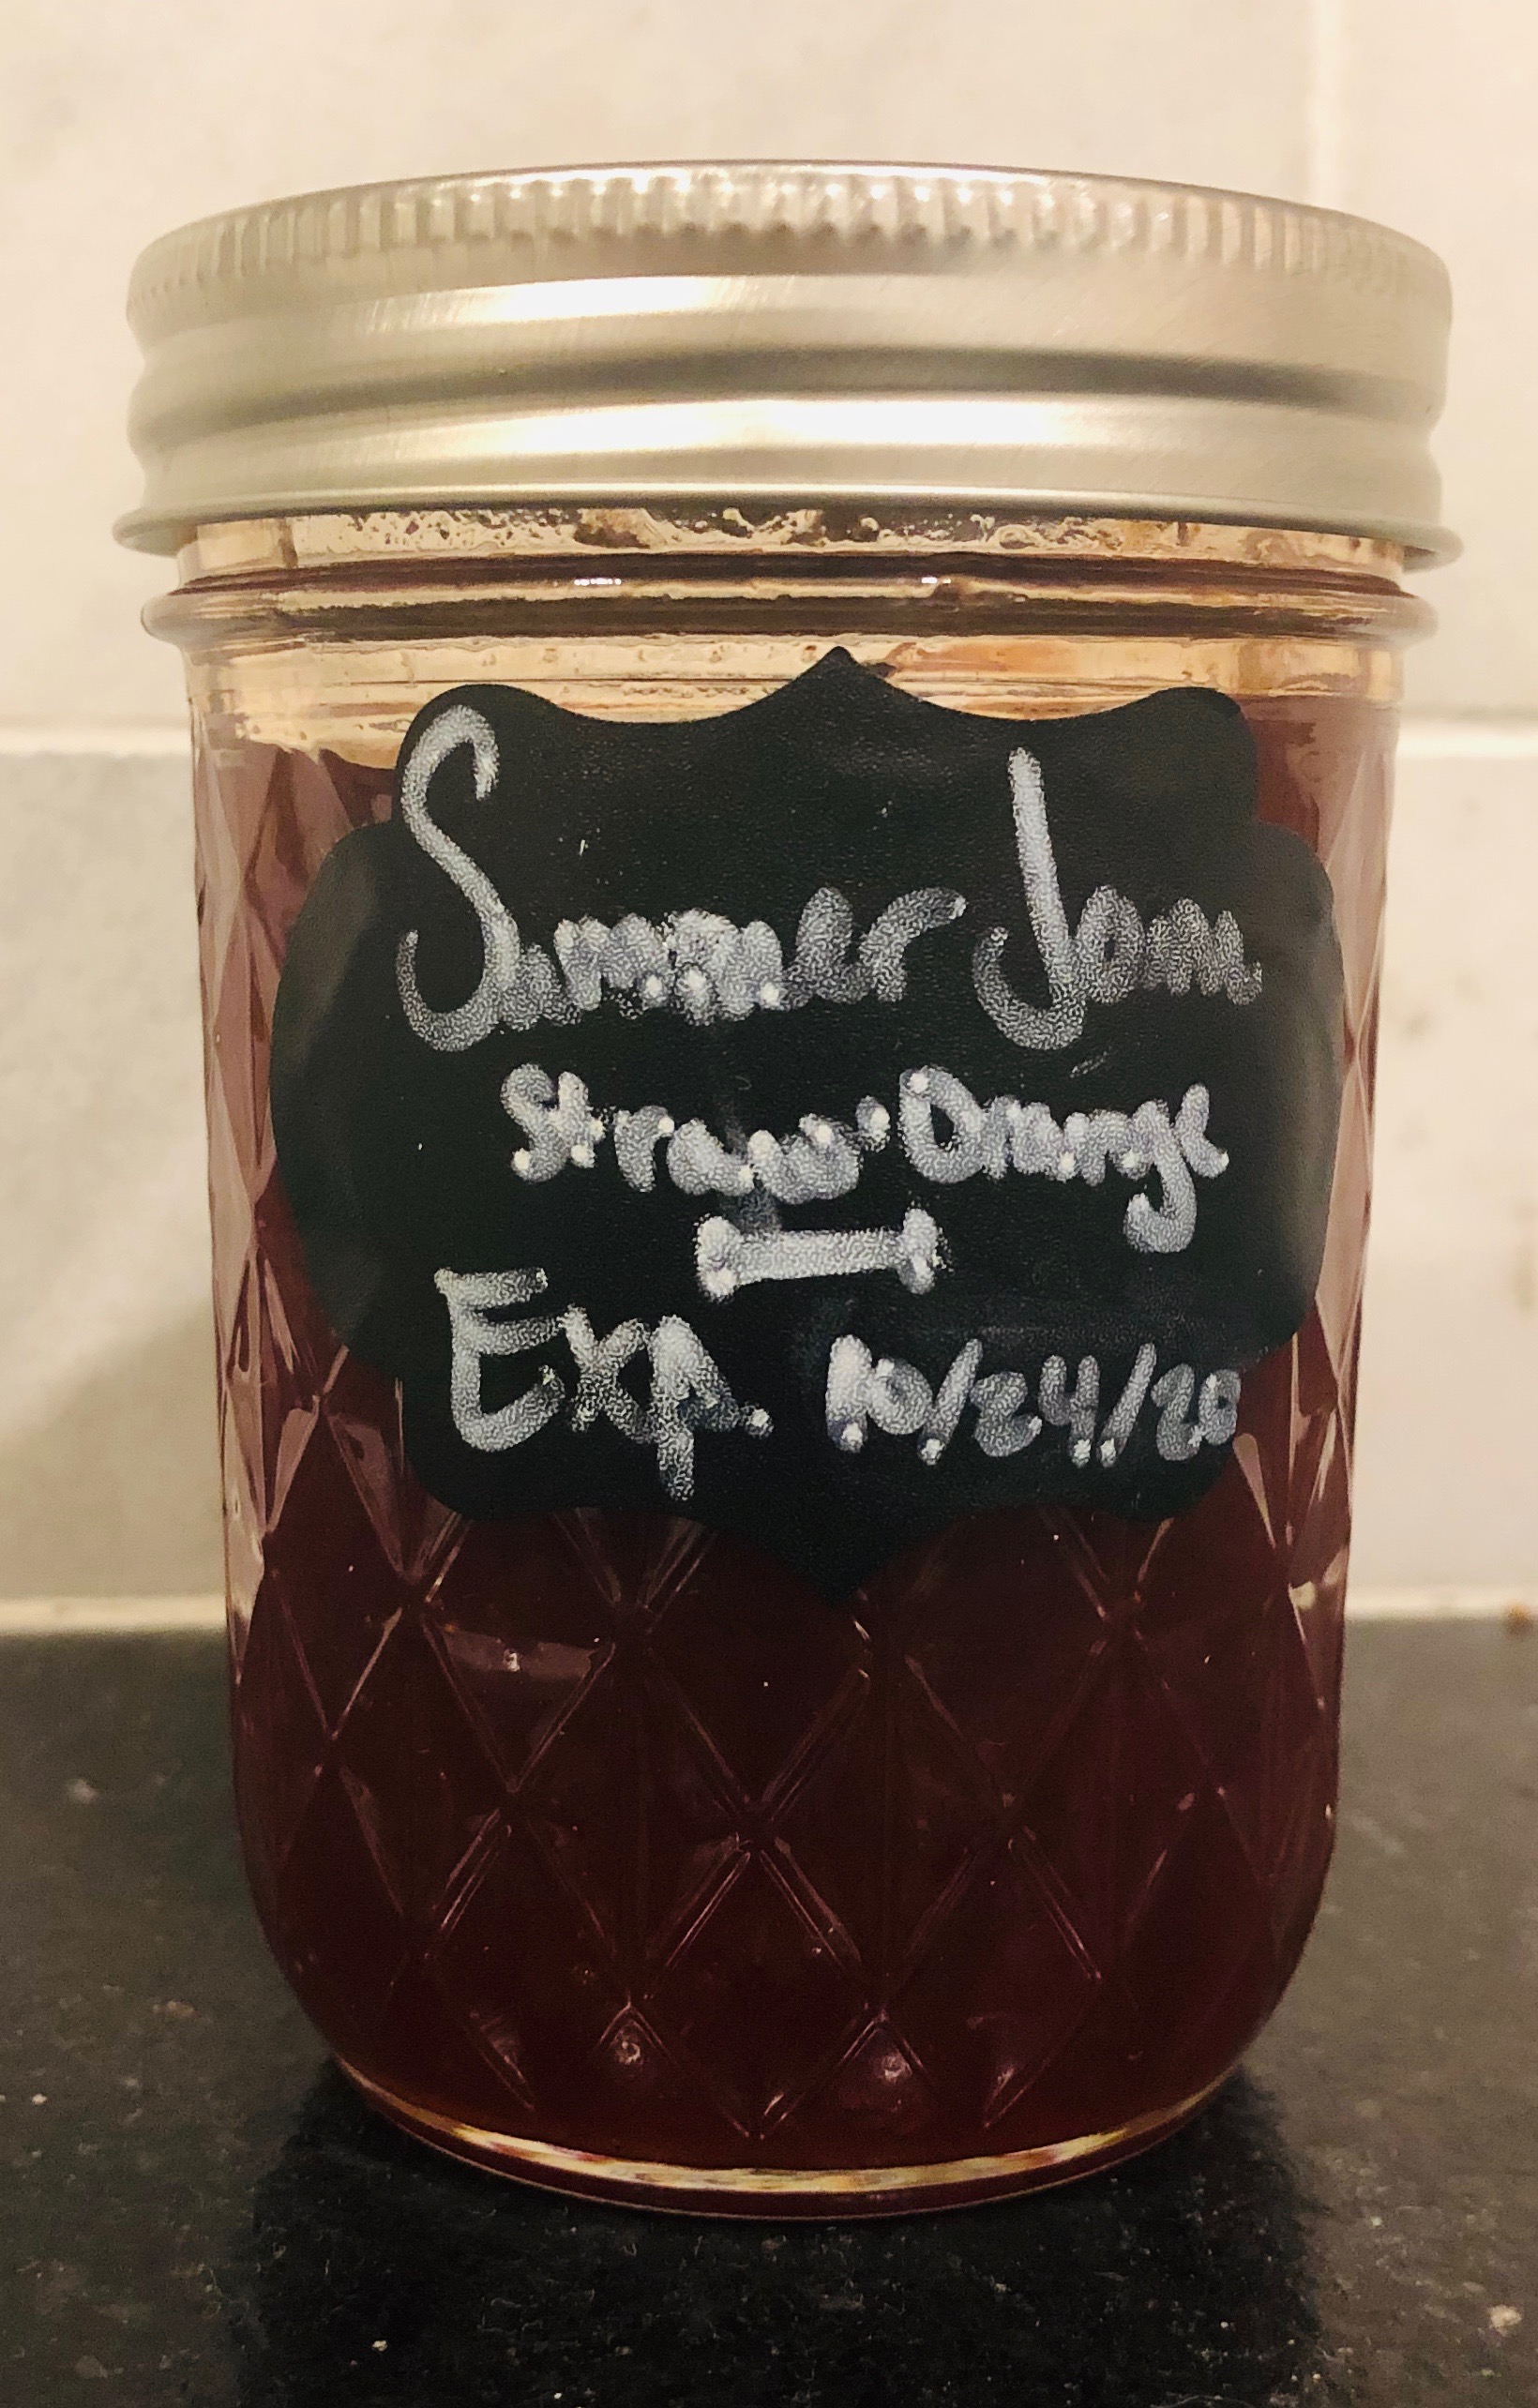 Strawberry Orange Jam